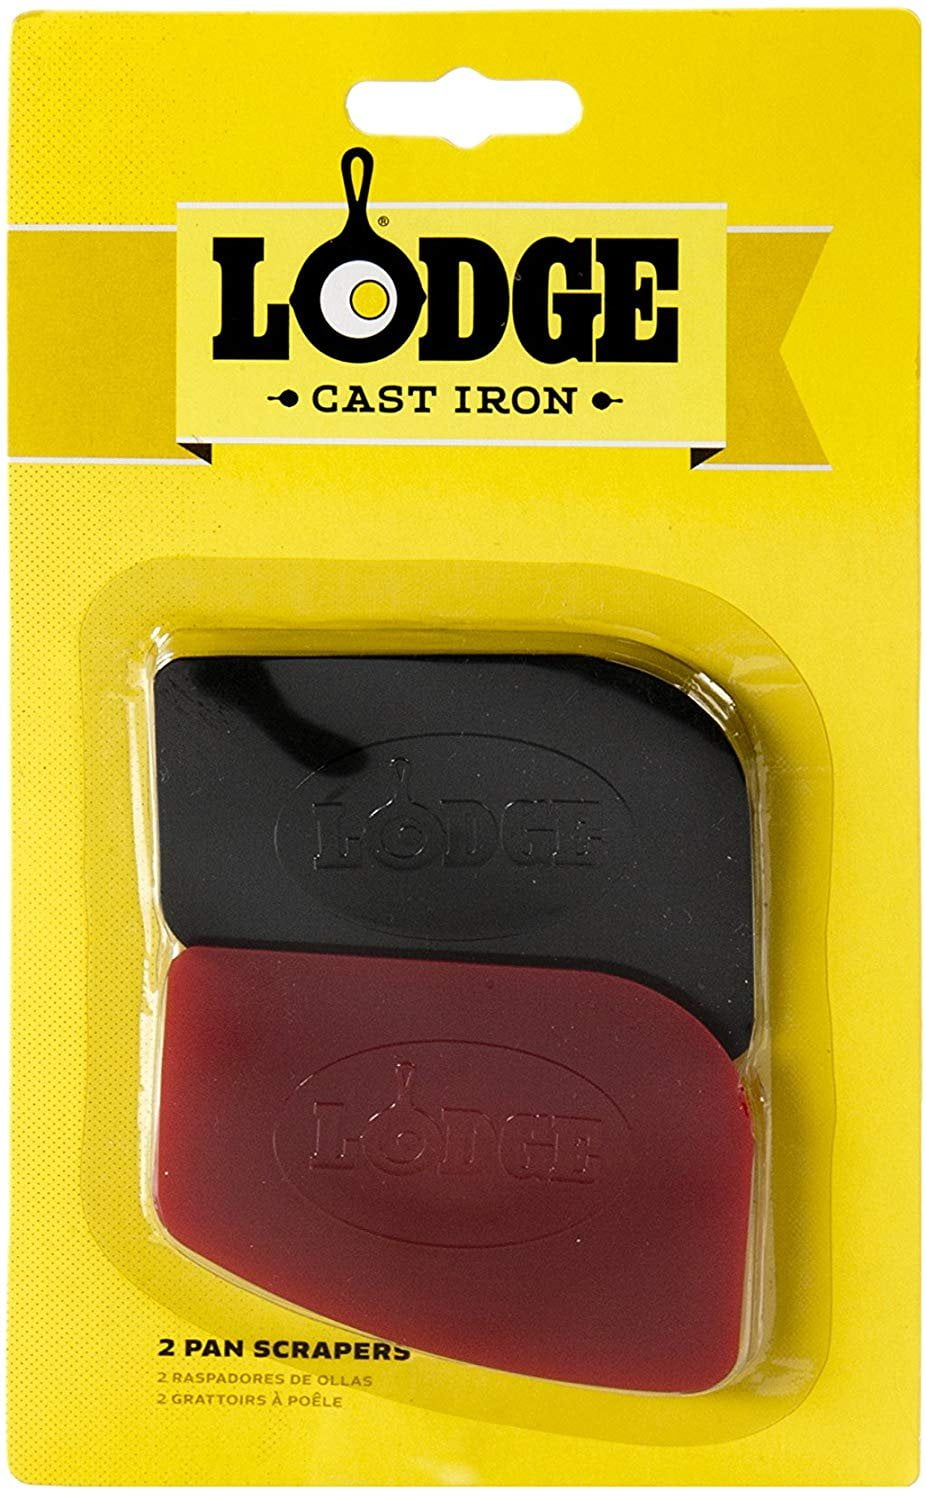 Lodge L8SK3 Pre-Seasoned Cast-Iron Skillet, 10.25-inch and Lodge SCRAPERPK  Durable Polycarbonate Pan Scrapers, Red and Black, 2-Pack Bundle